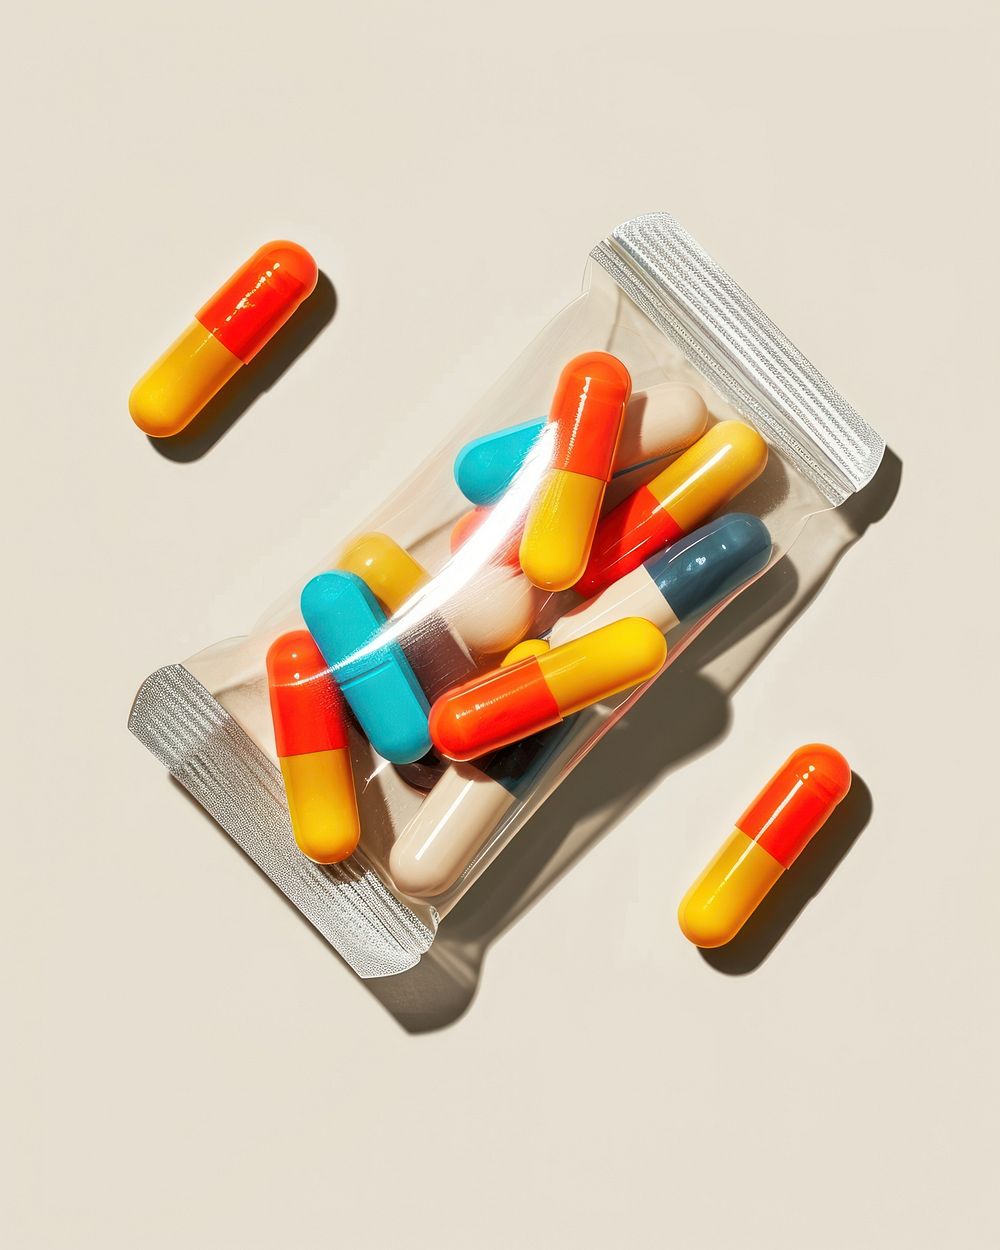 Pill capsule antioxidant medication.